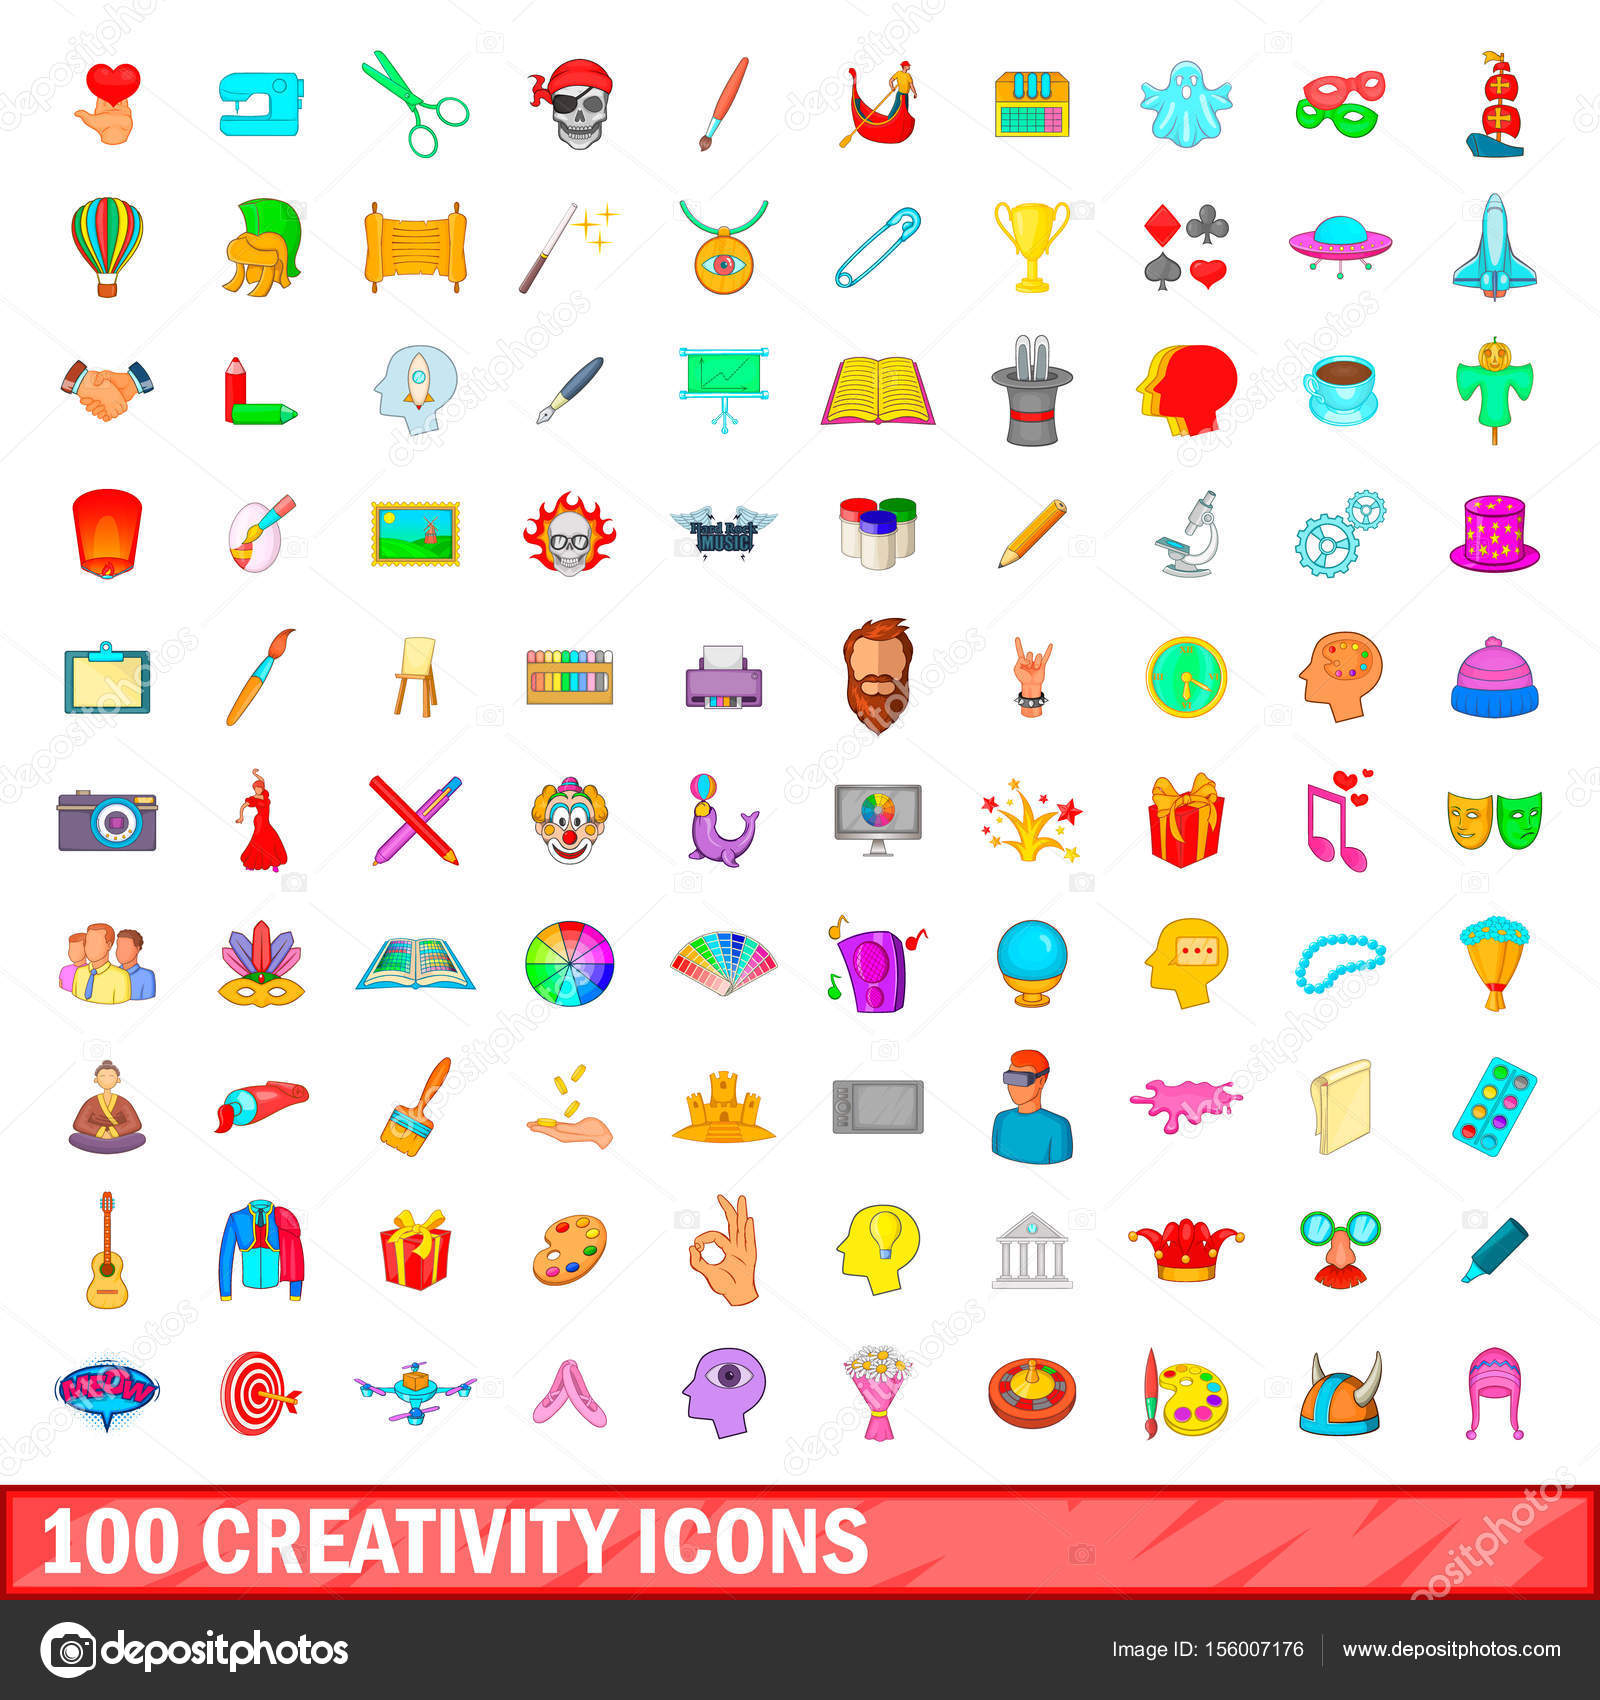 Creativity icons stock vector. Illustration of digital - 41211022